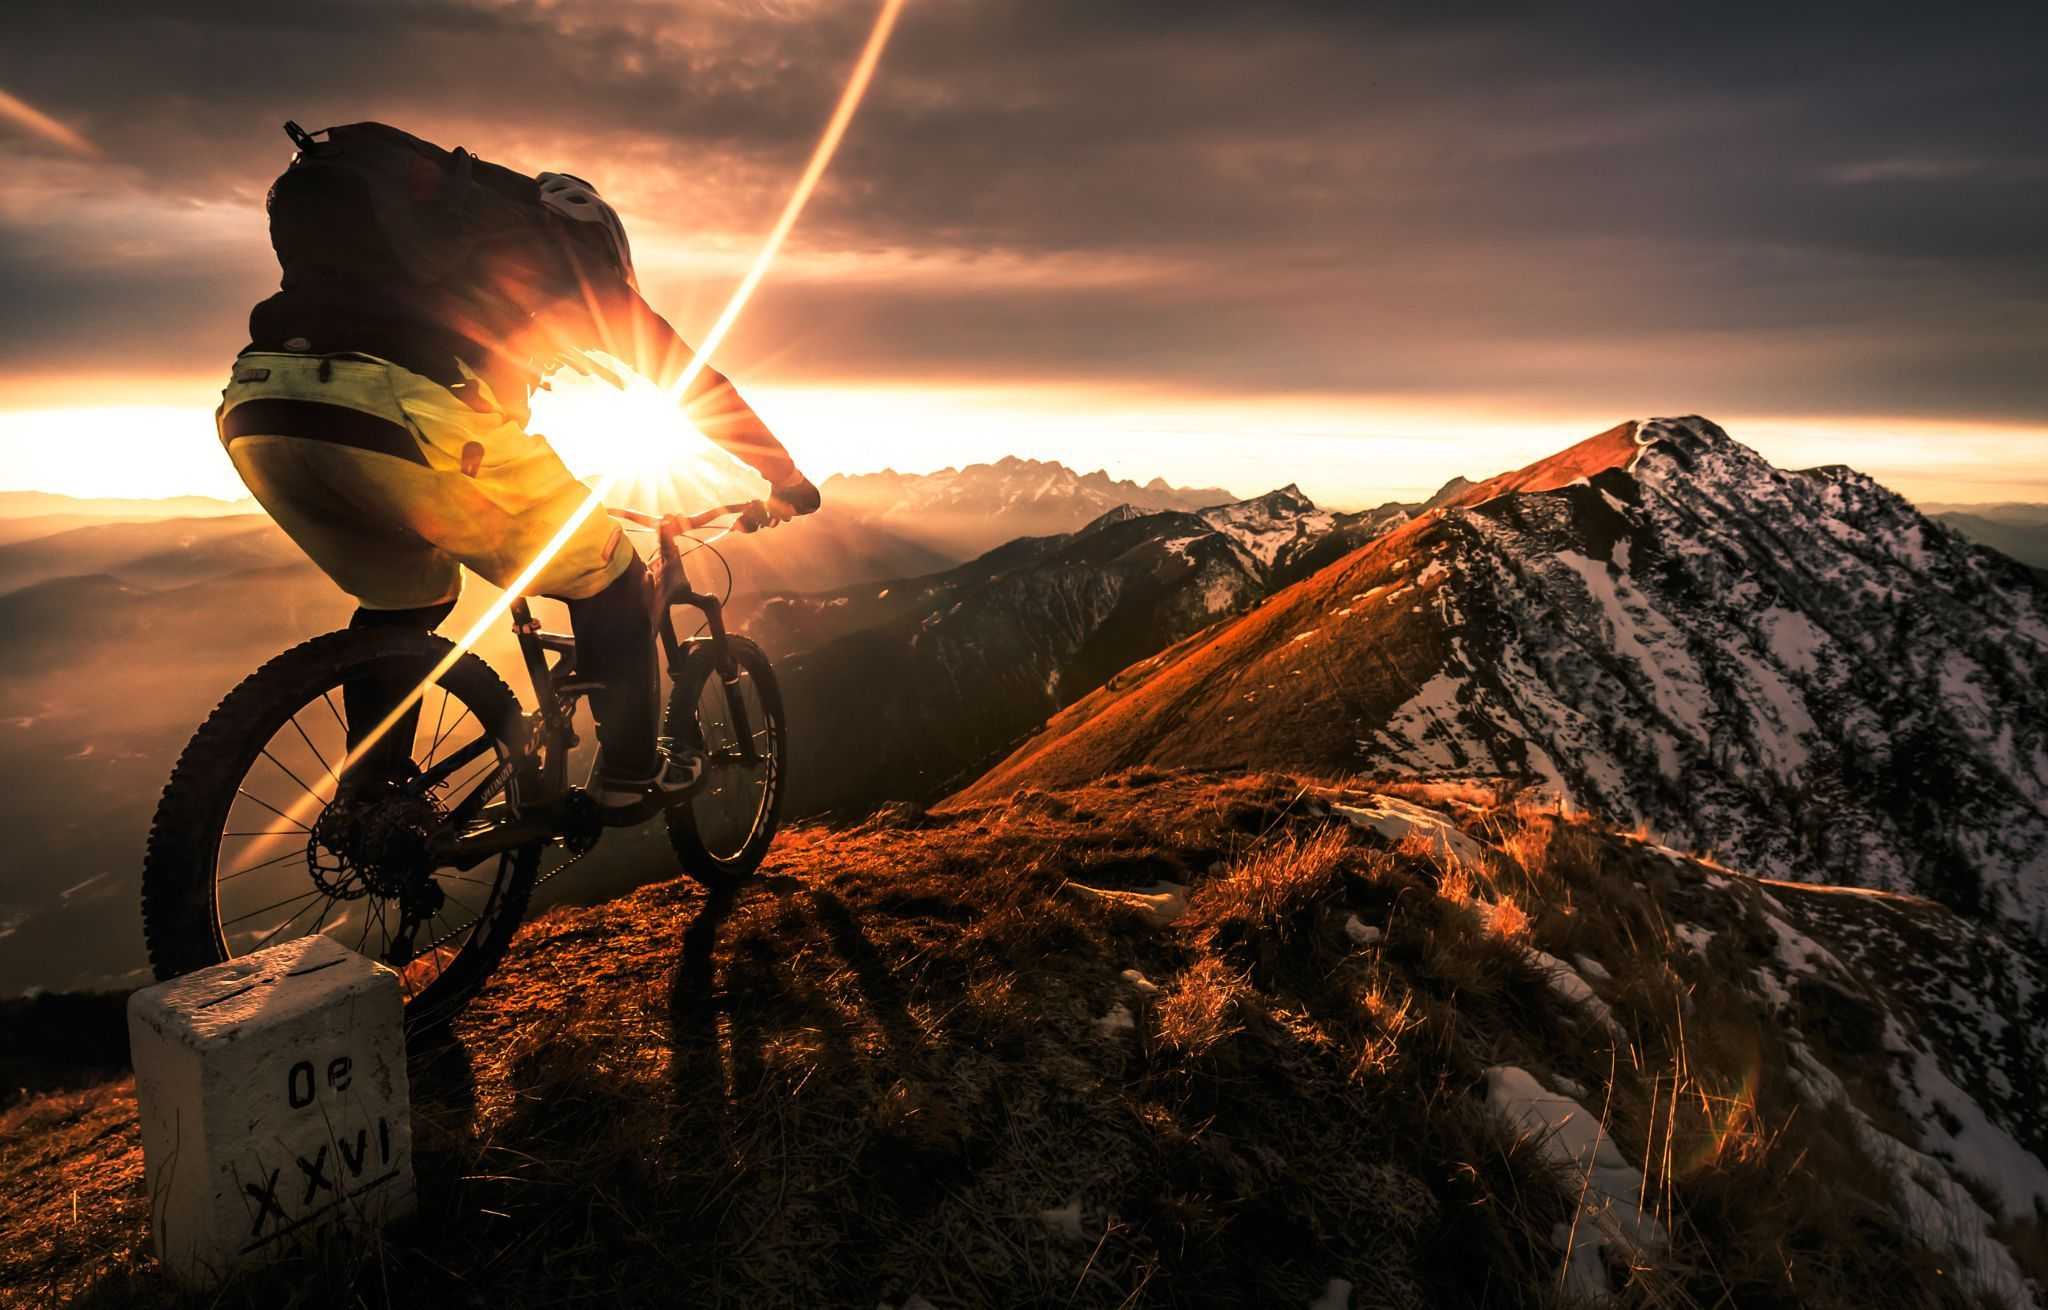 Aesthetic Mountain Biking Wallpaper - KoLPaPer - Awesome Free HD Wallpapers